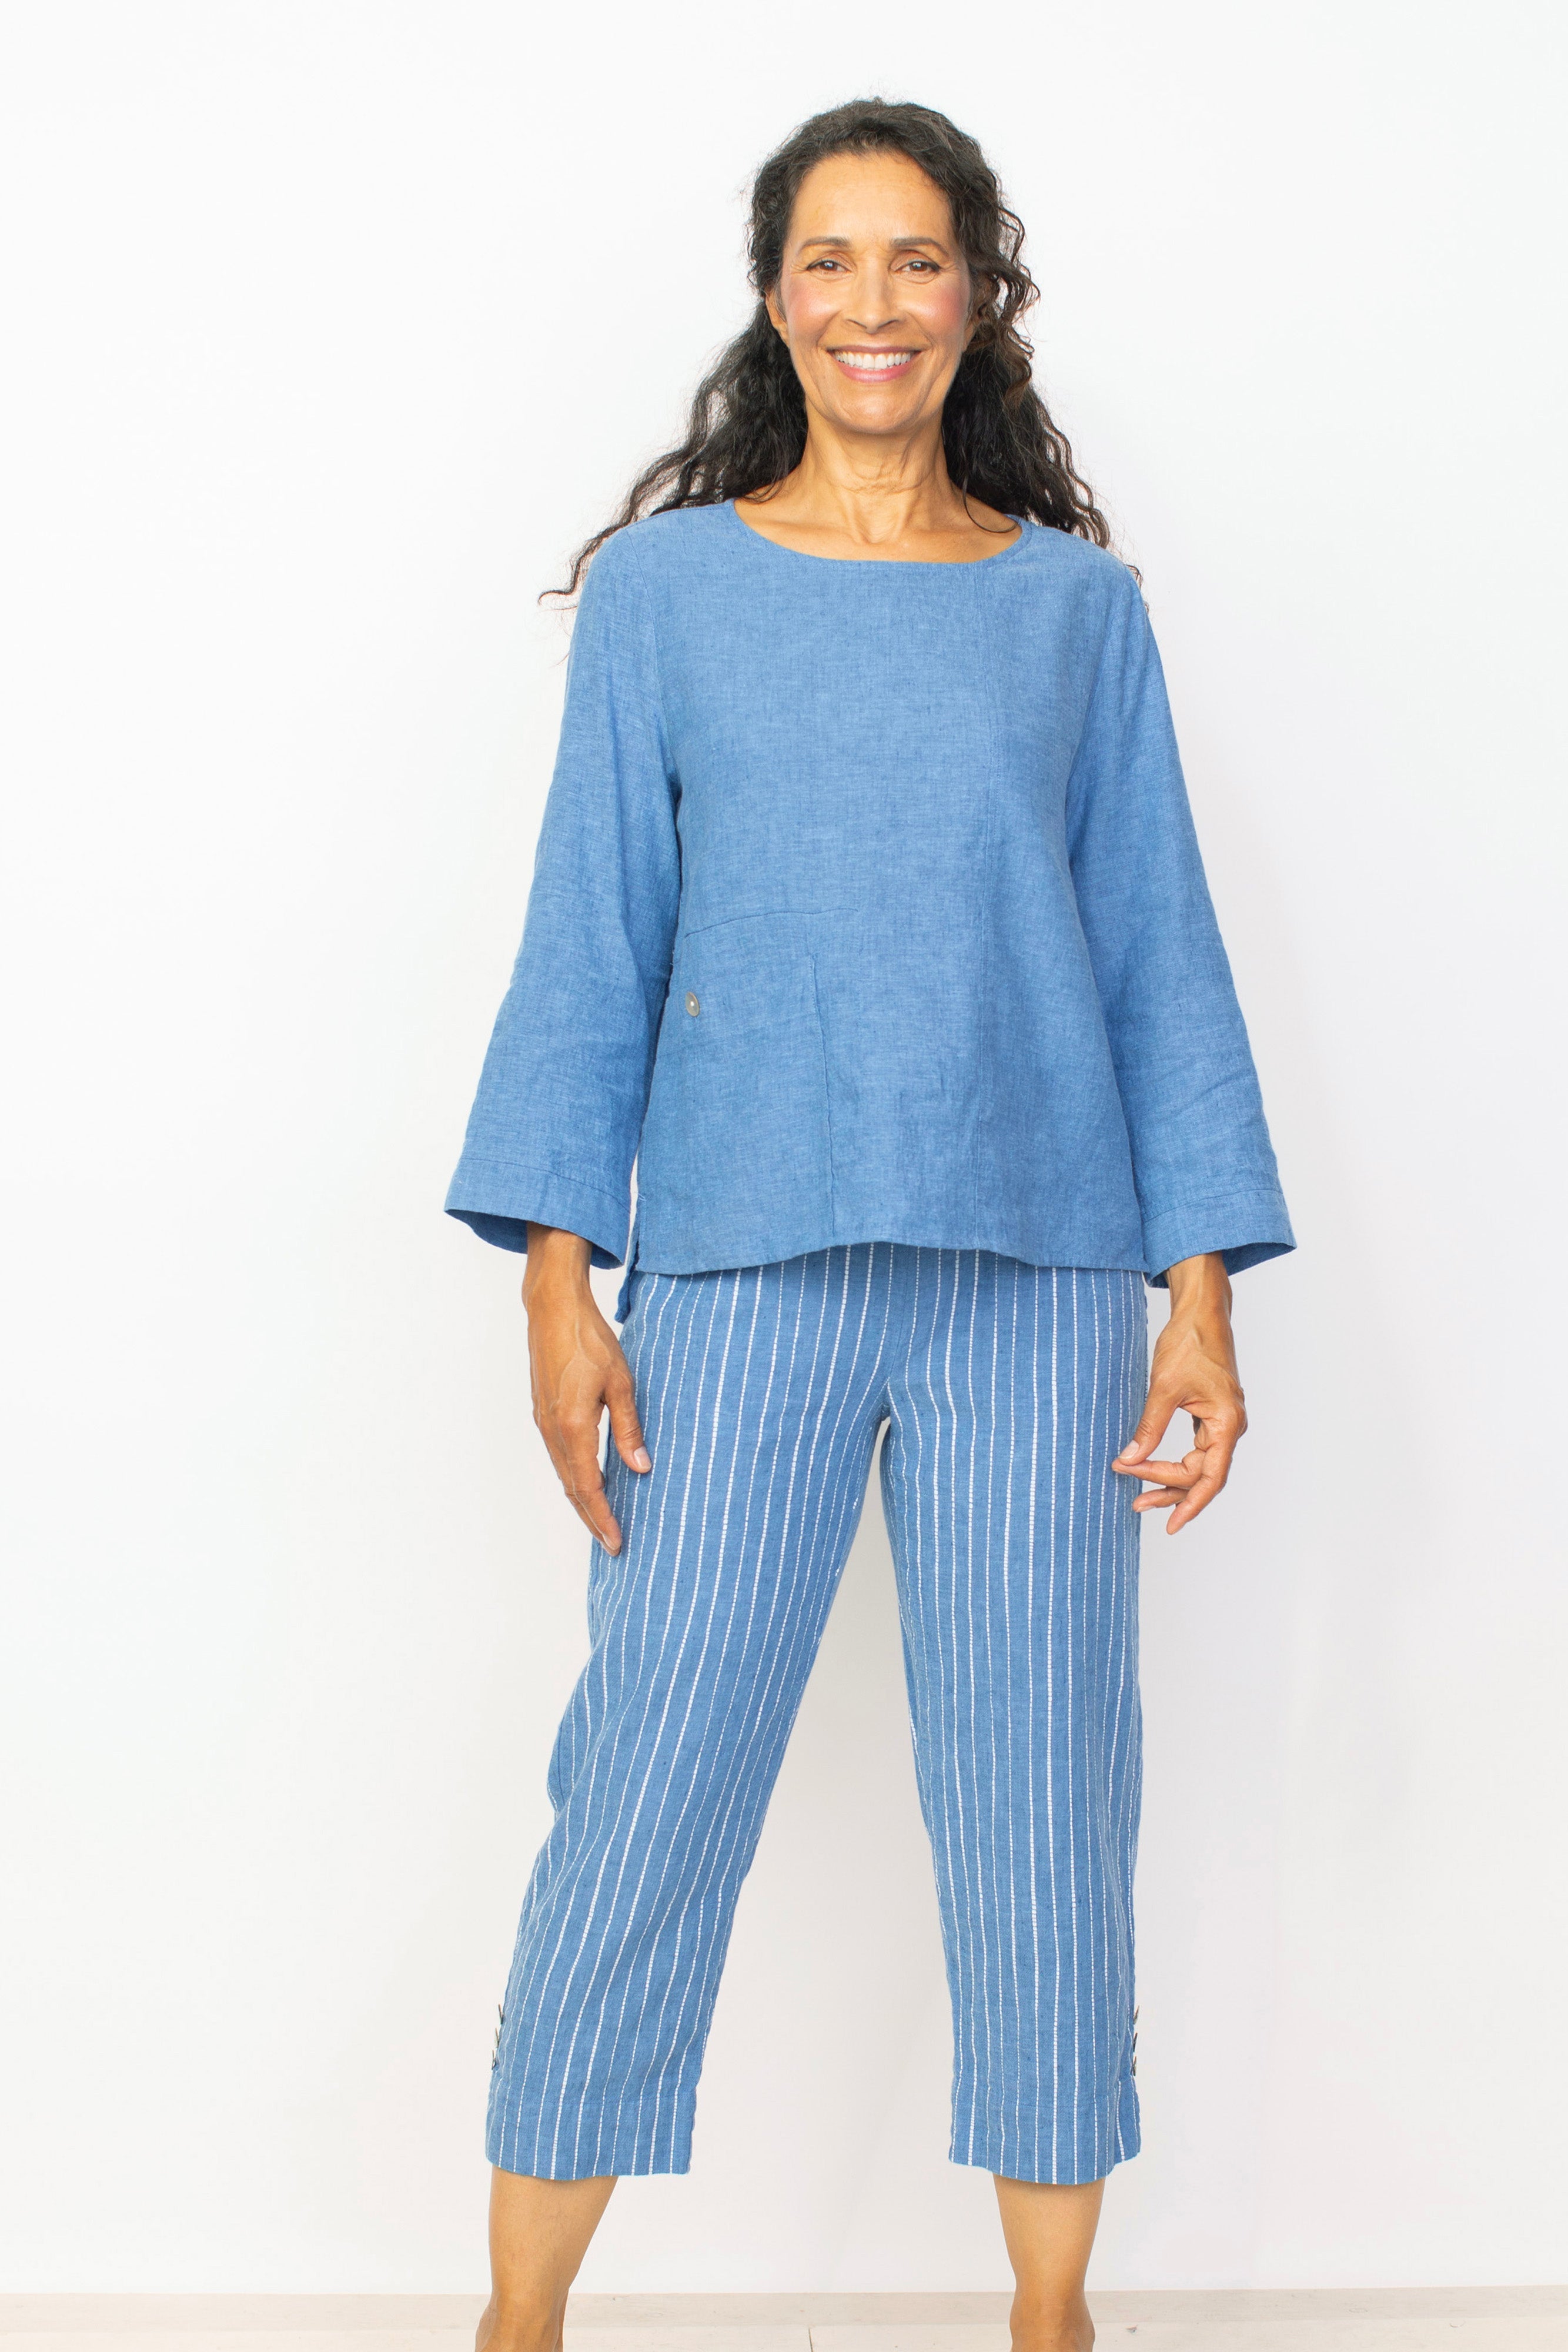 Beatrix Hidden Pocket Pullover and Travel Sweatshirt – Pokete